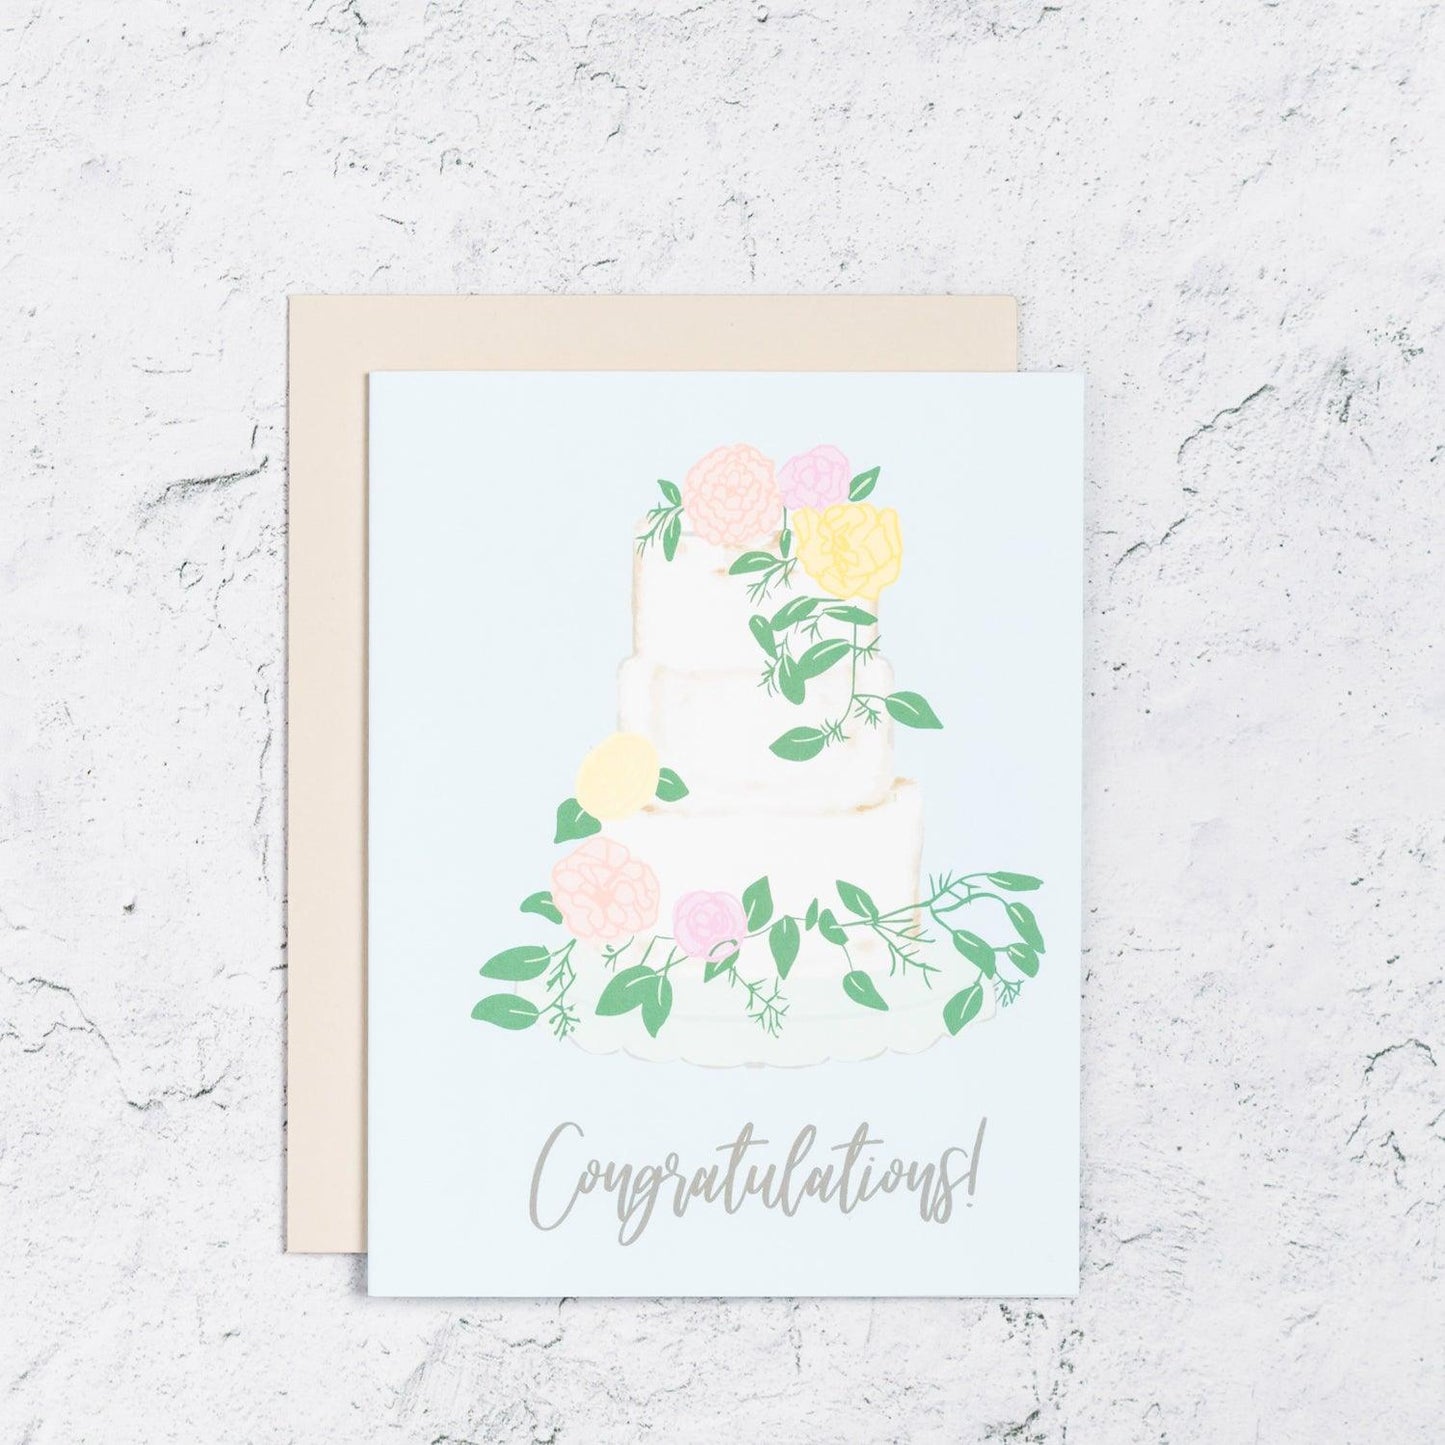 Congratulations Card With Wedding Cake